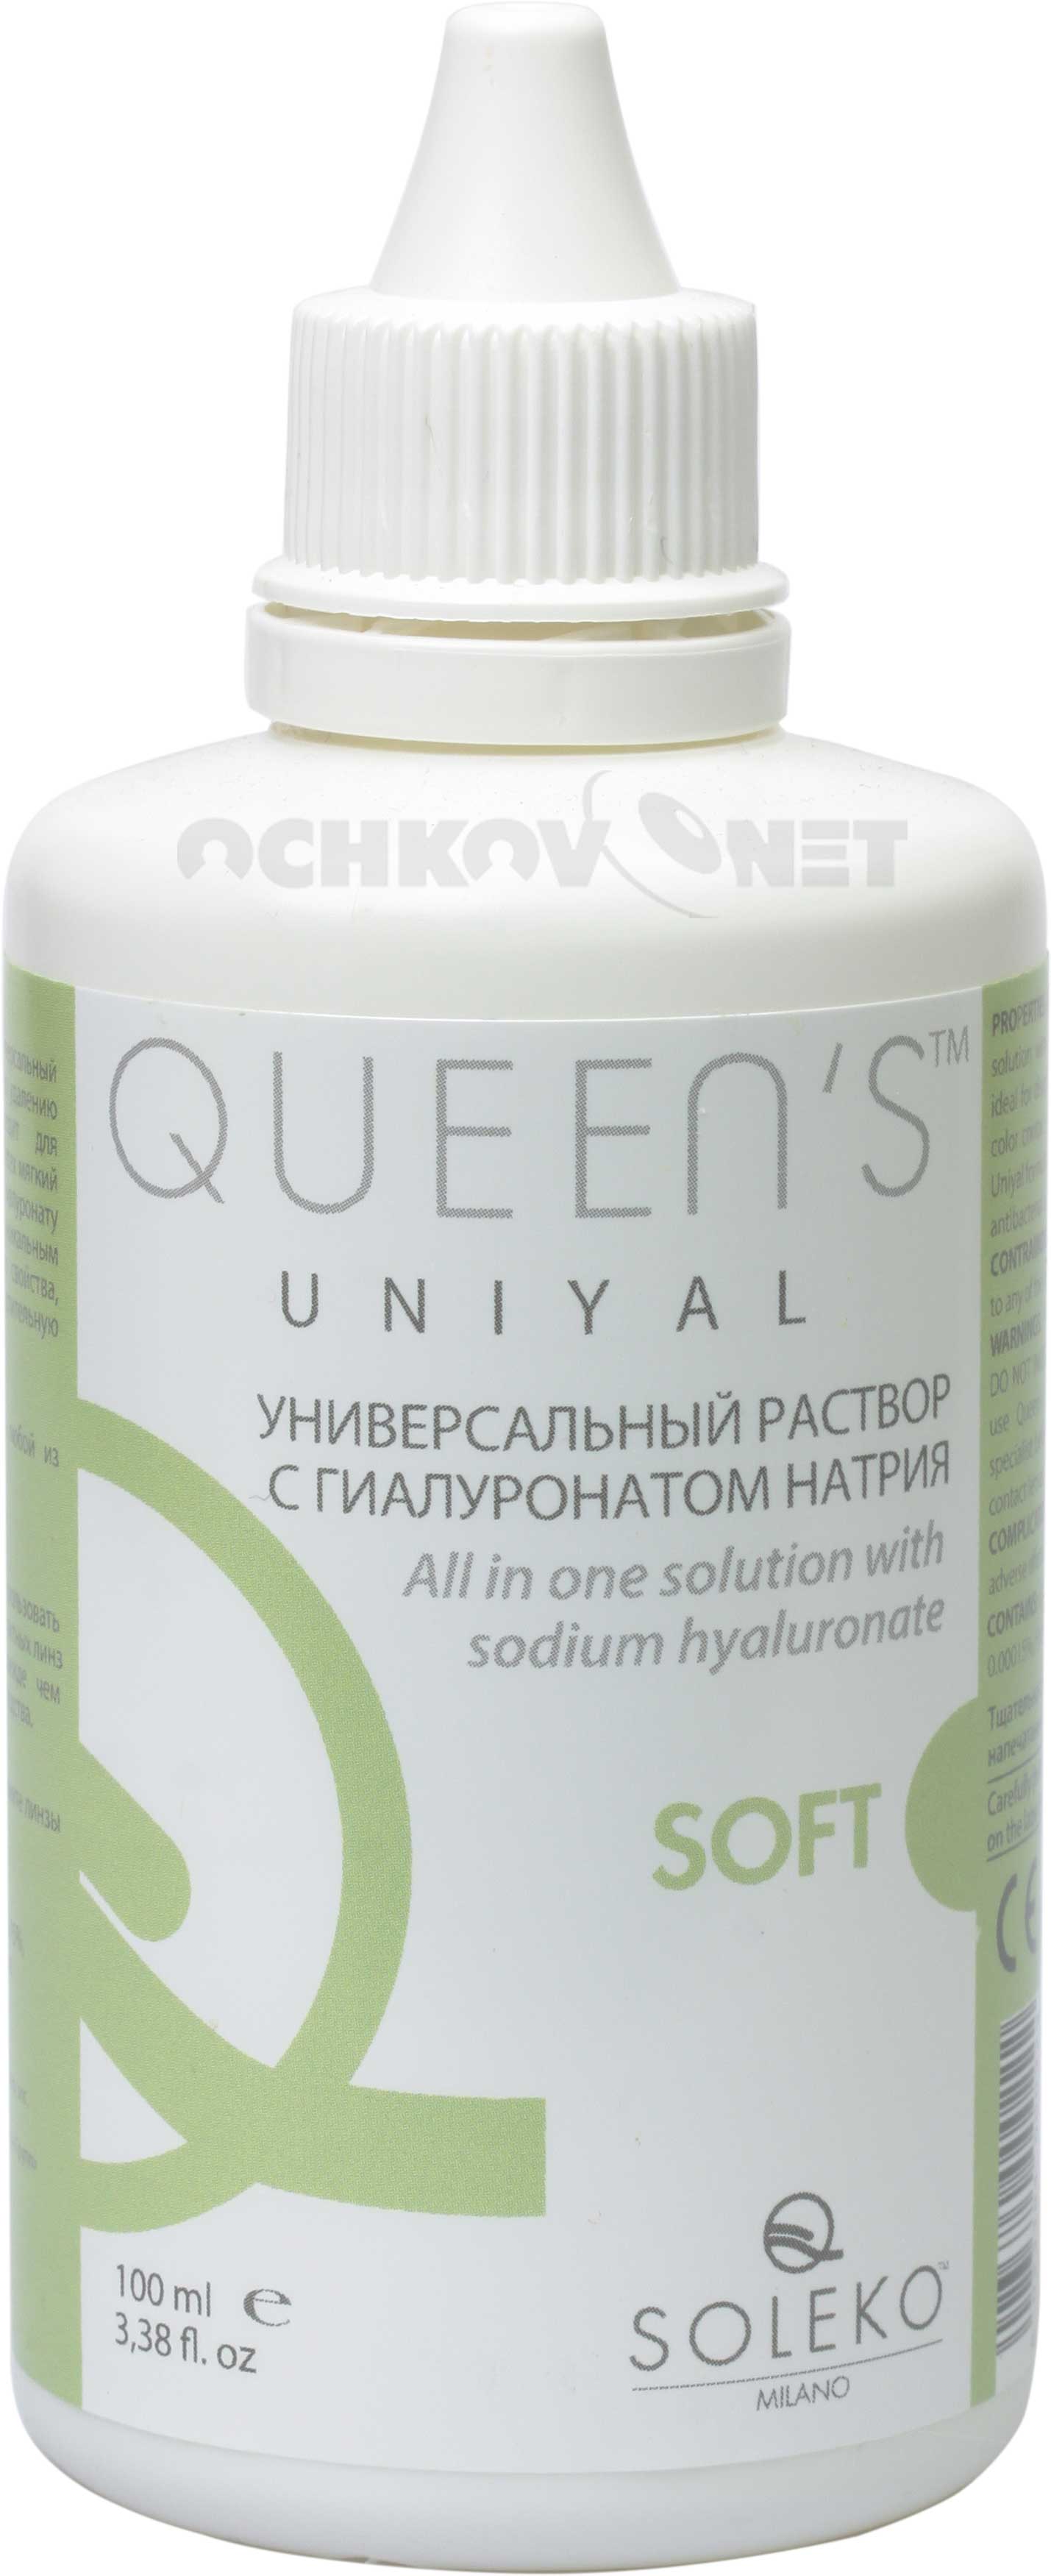 Купить Queen’s UniYal Queen’s UniYal 100 мл, Soleko S.P.A